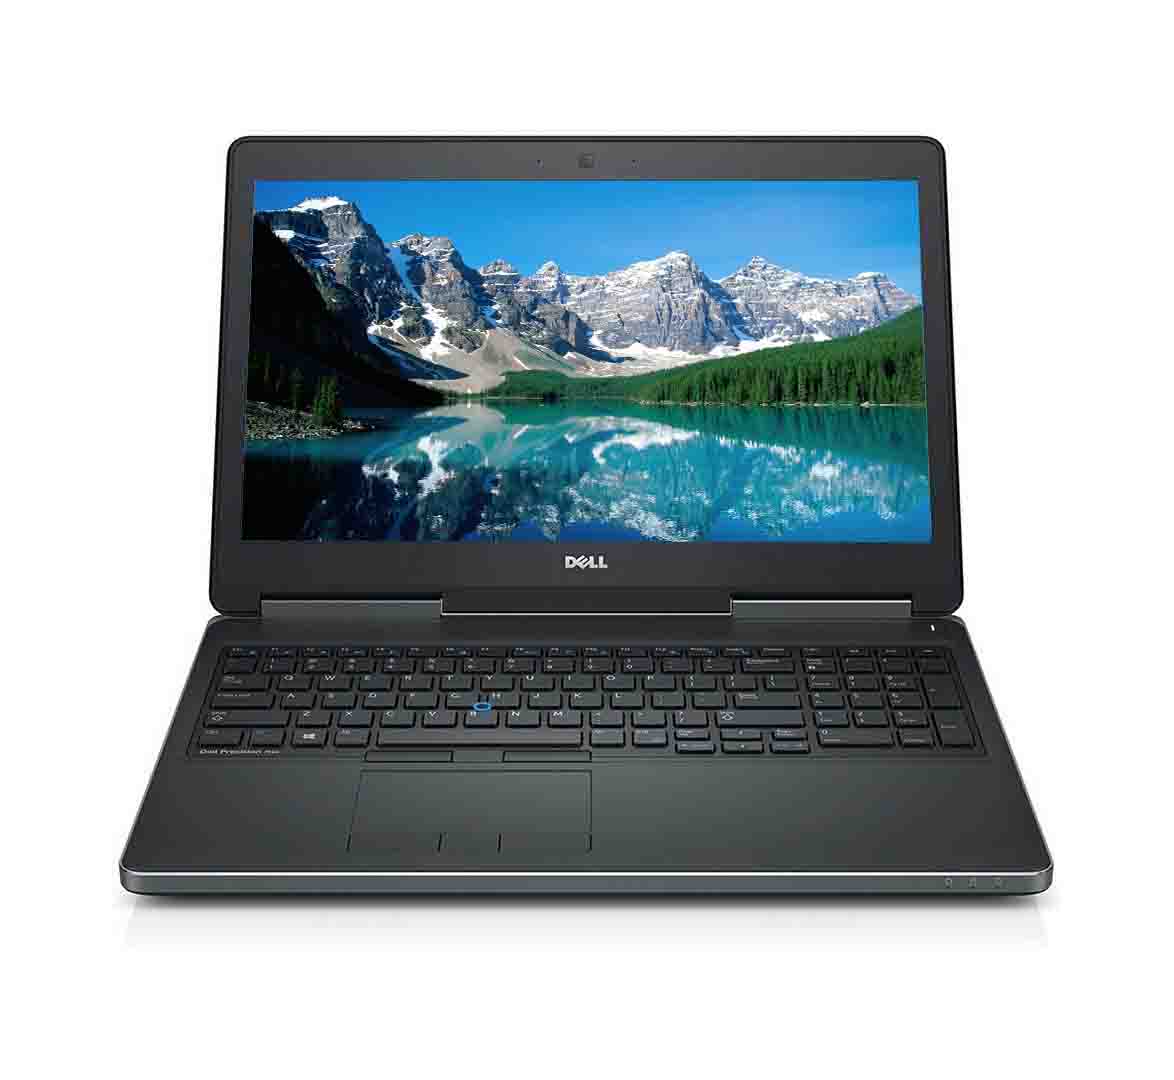 Dell Precision 7510 Laptop, Intel XEON CPU, 16GB RAM, 512GB HDD, NVIDIA QUADRO M2000M 4GB GDDR5, 15.6 inch Display, Win 10, Refurbished Laptop